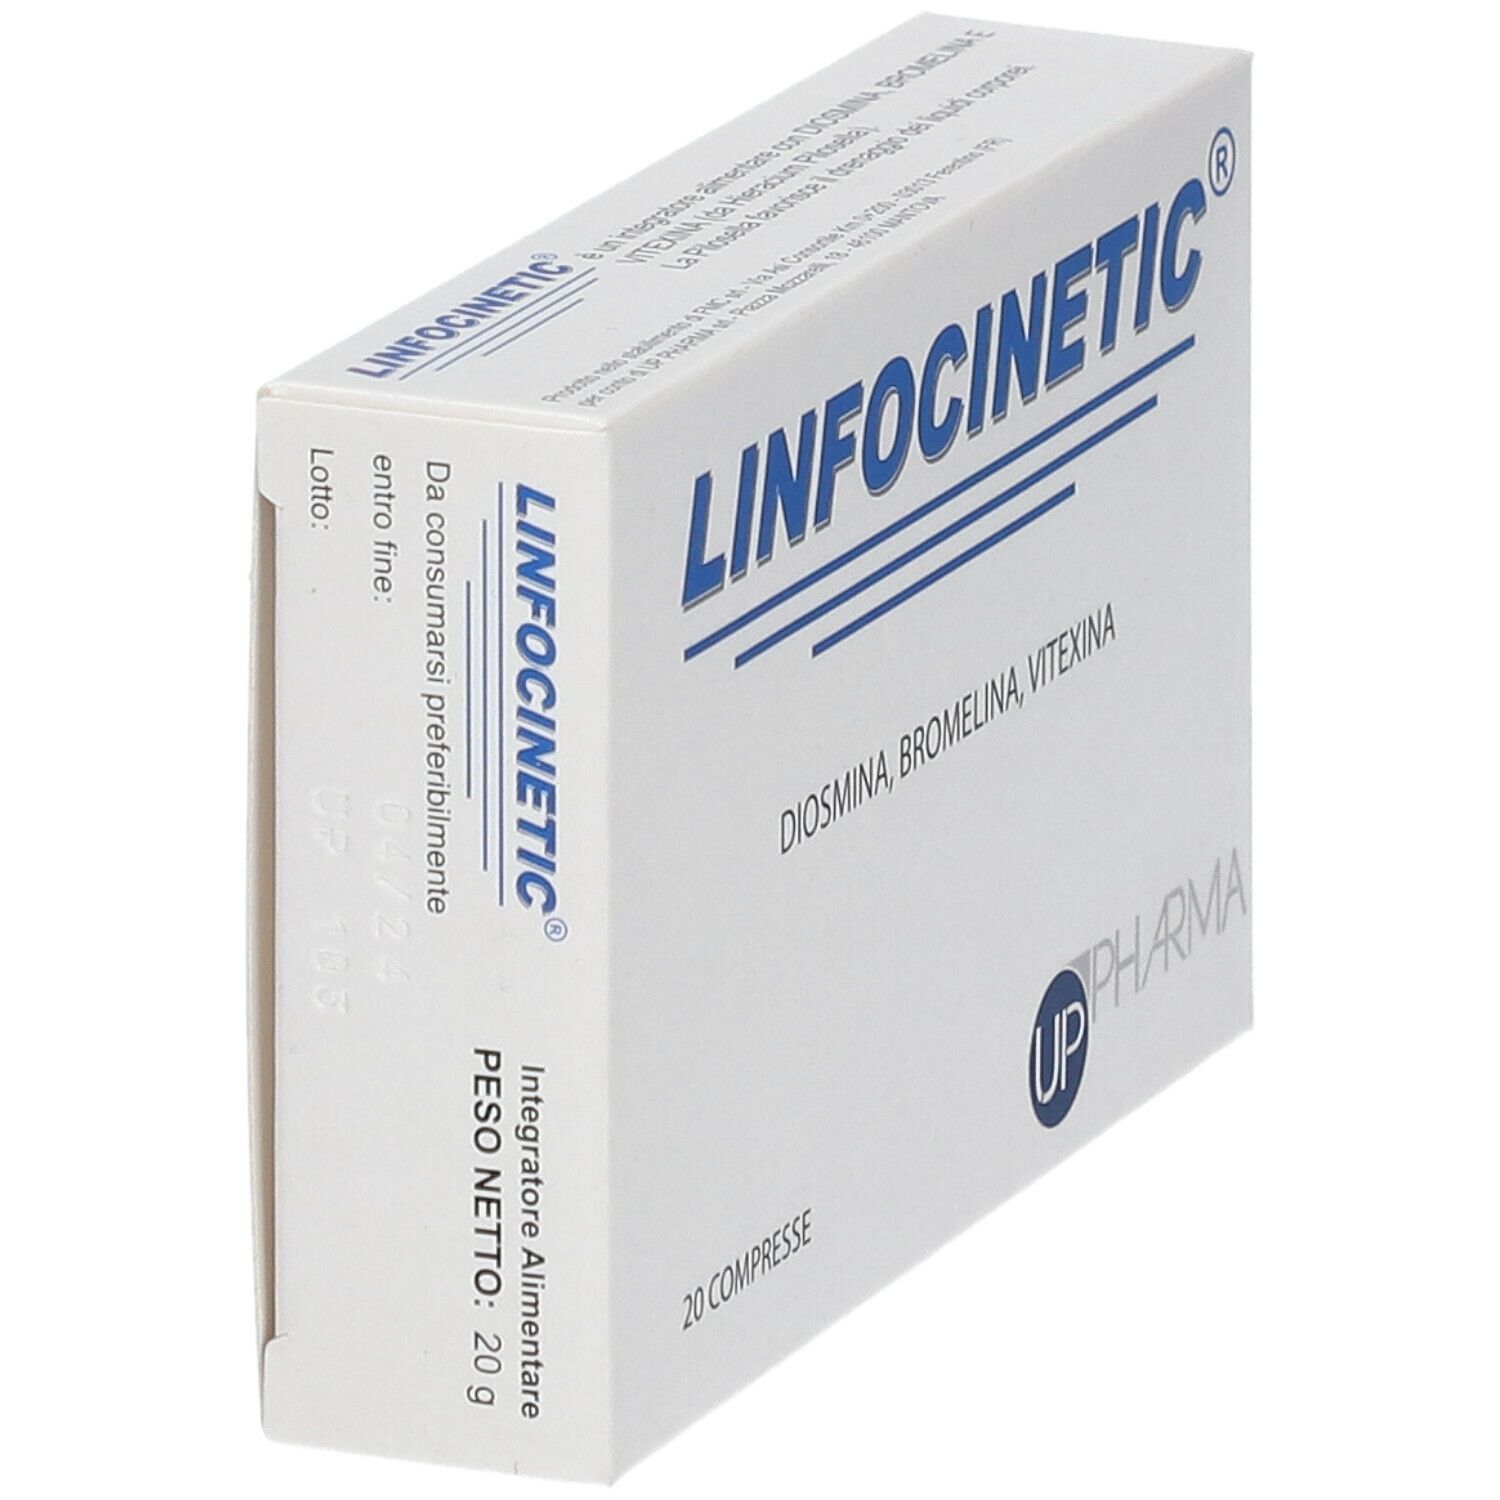 LINFOCINETIC®